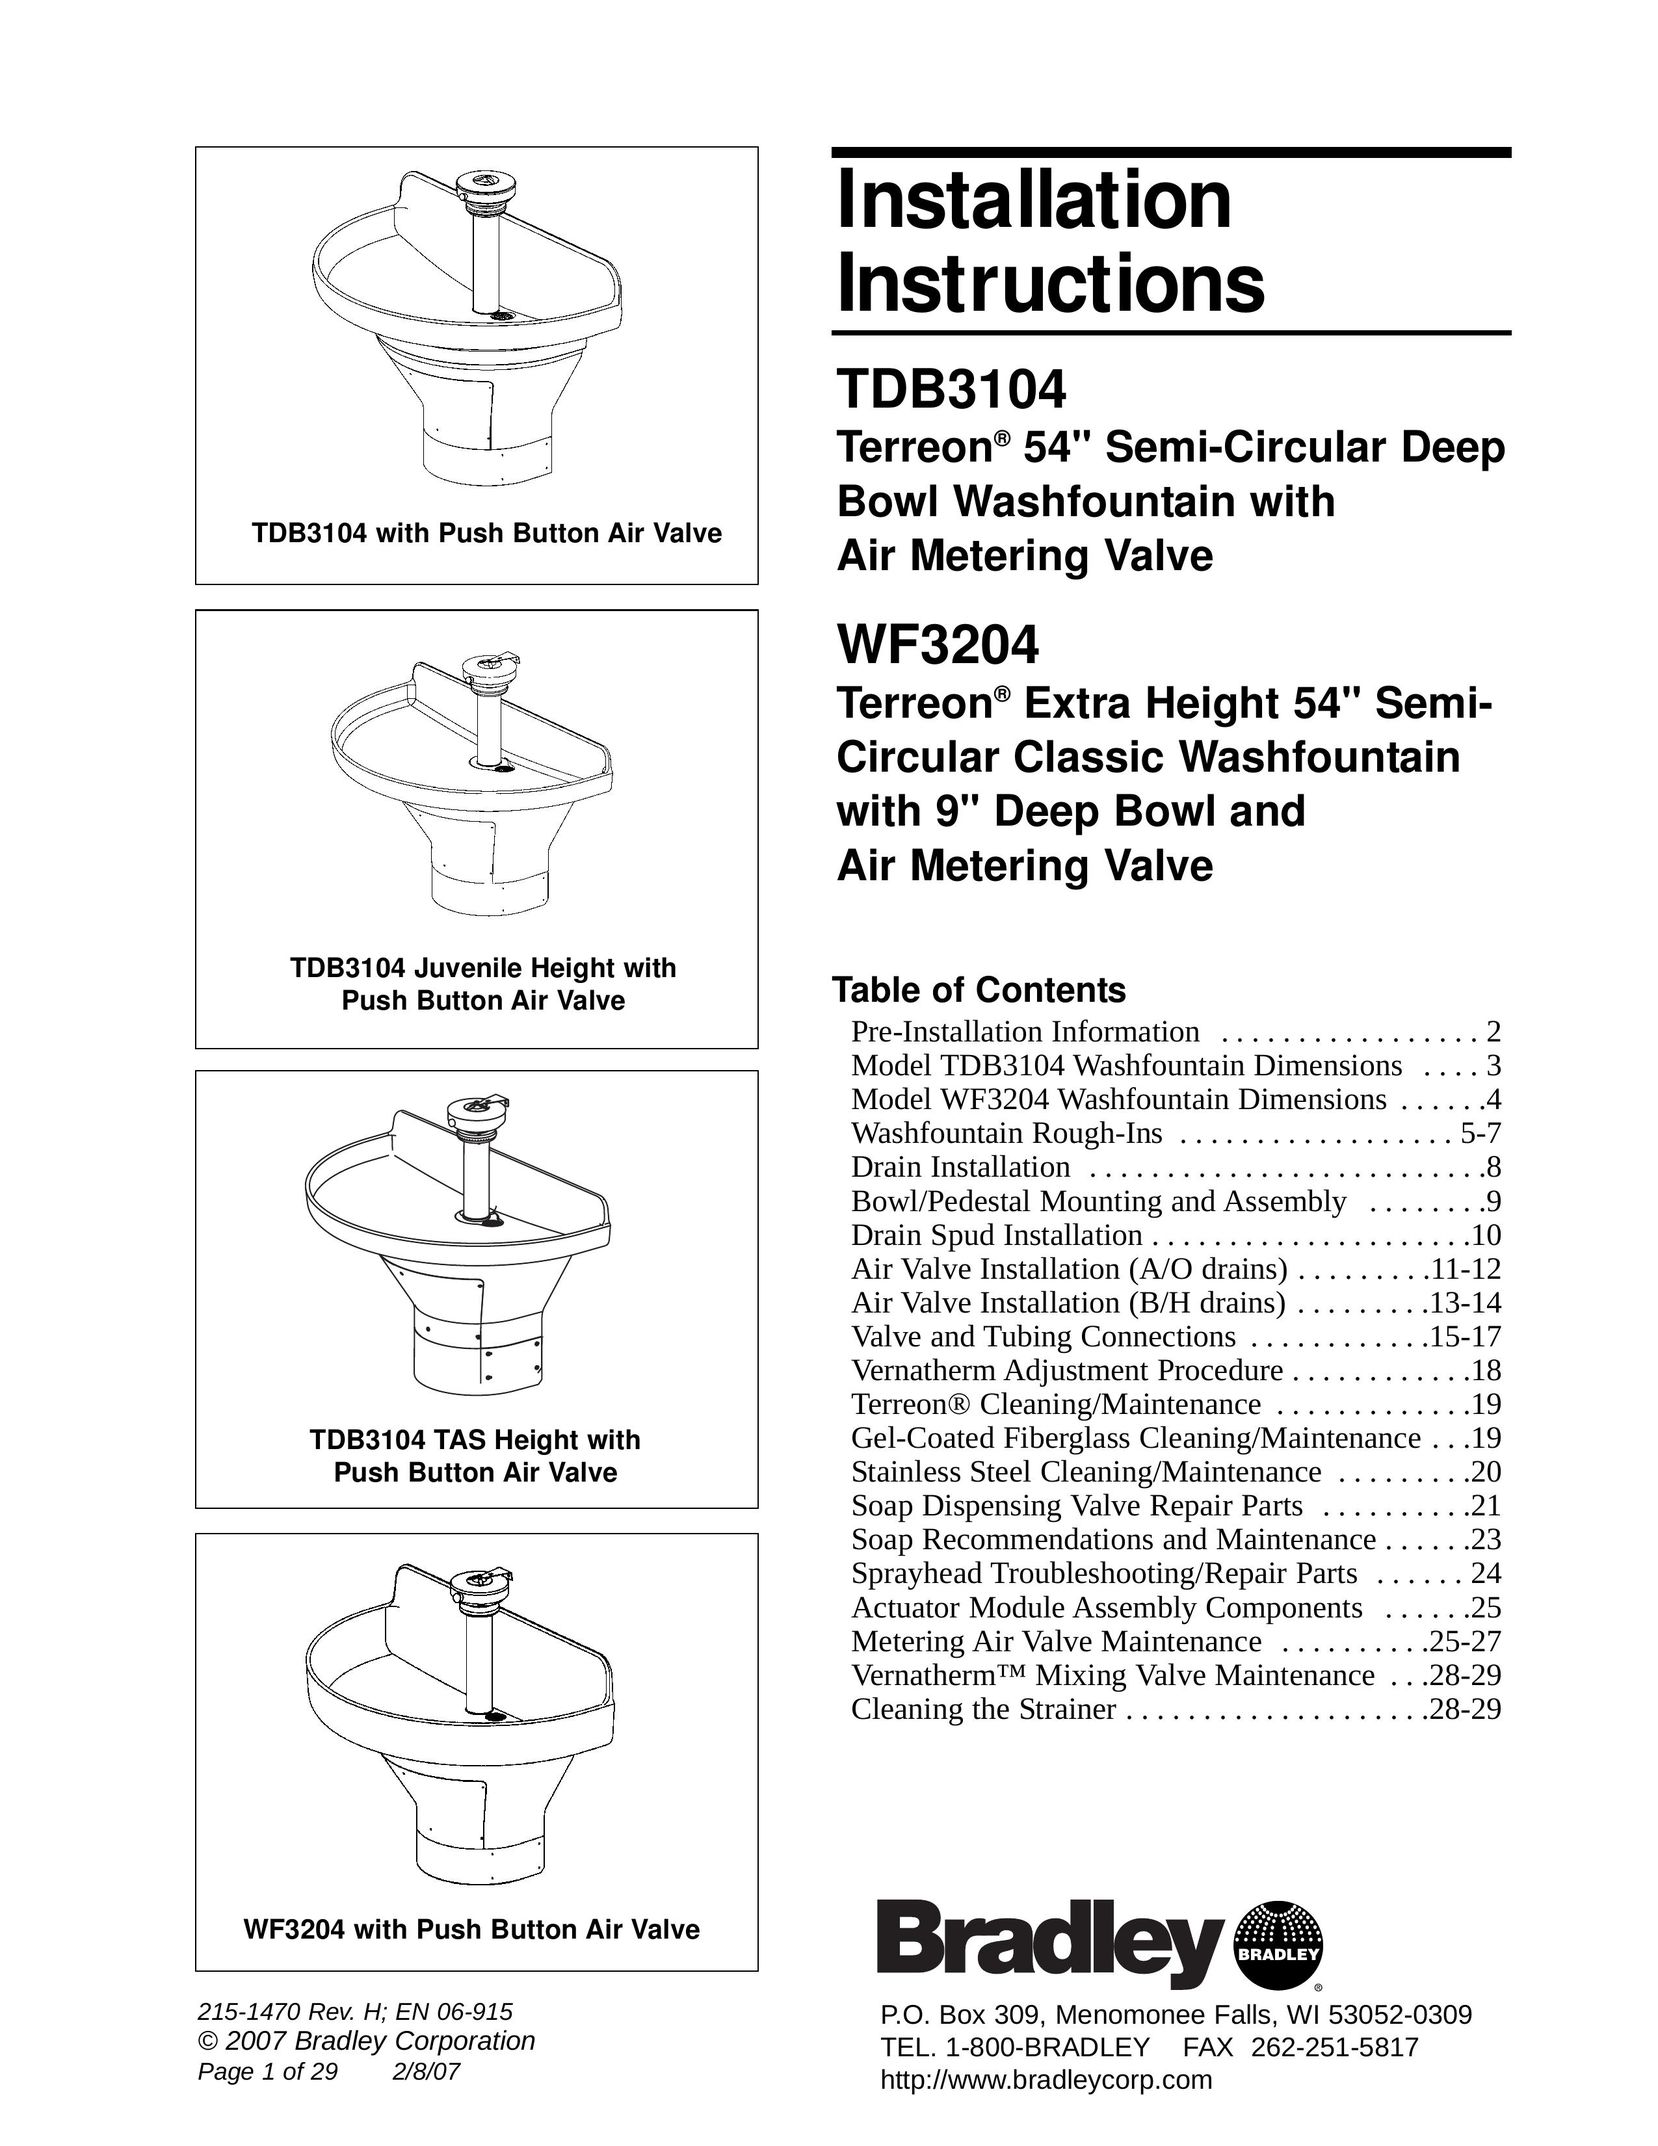 Bradley Smoker WF3204 Plumbing Product User Manual